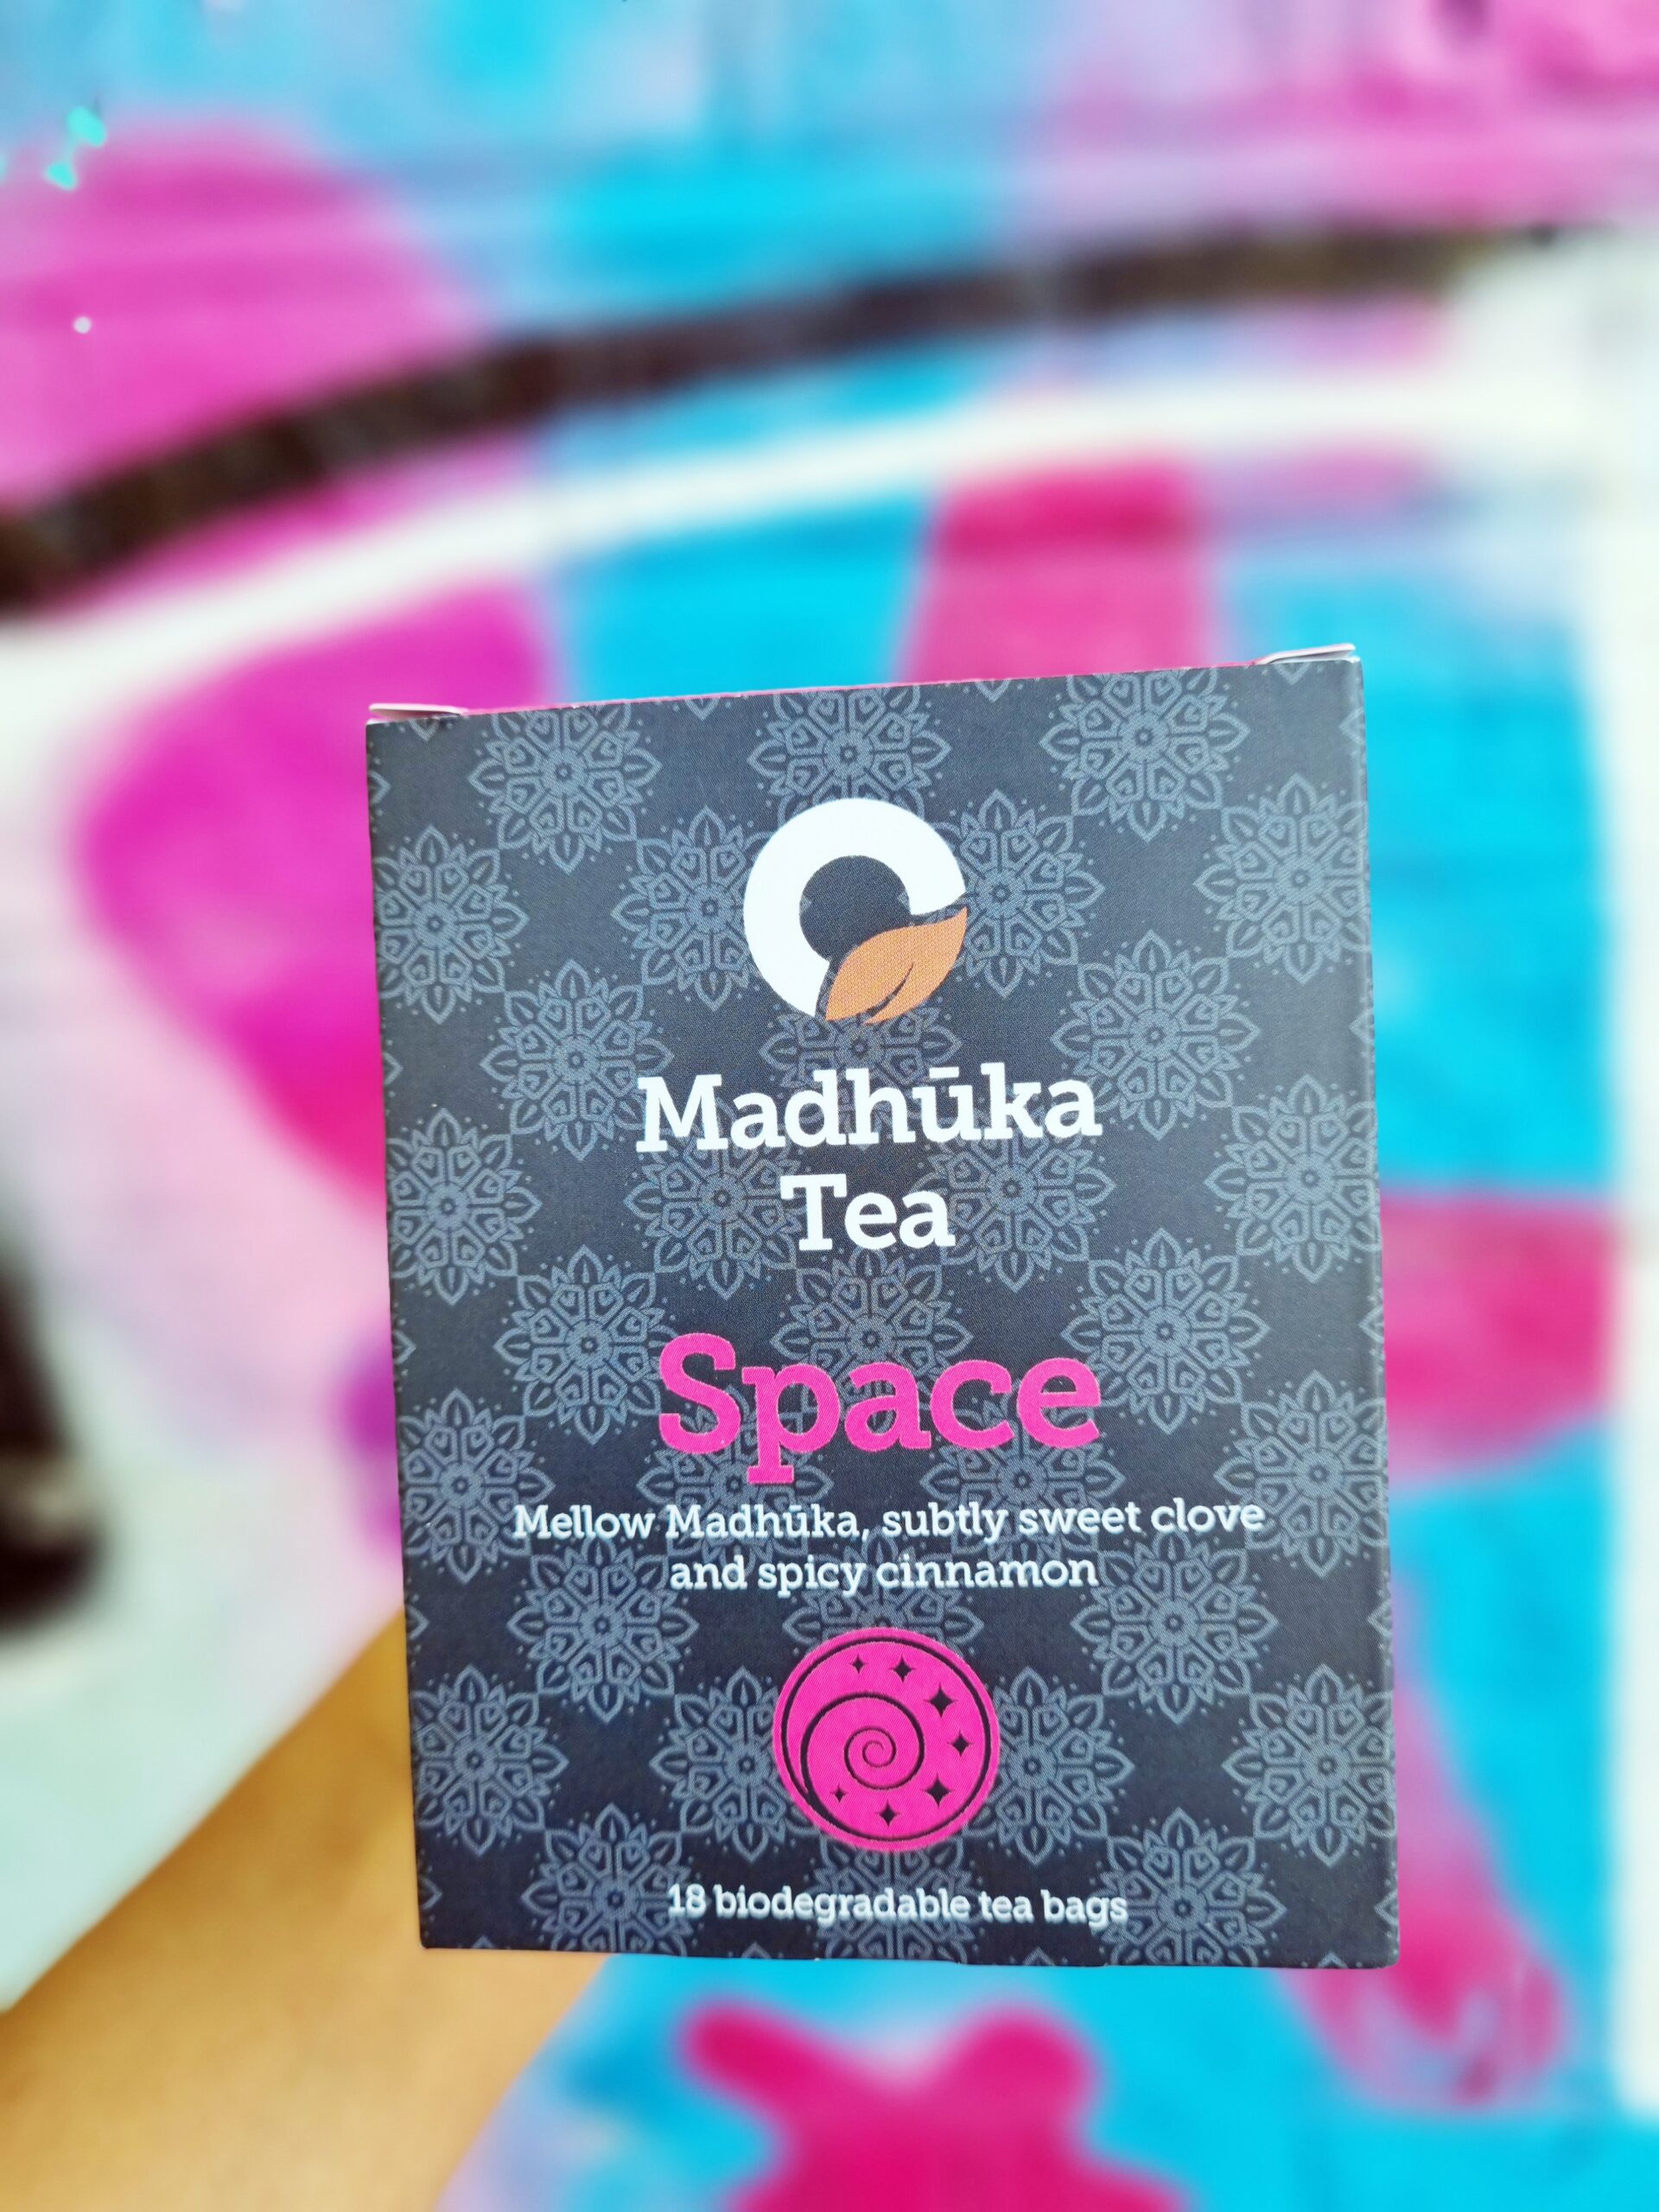 <img src="madhuka tea.jpg" alt="madhuka herbal tea space "/>